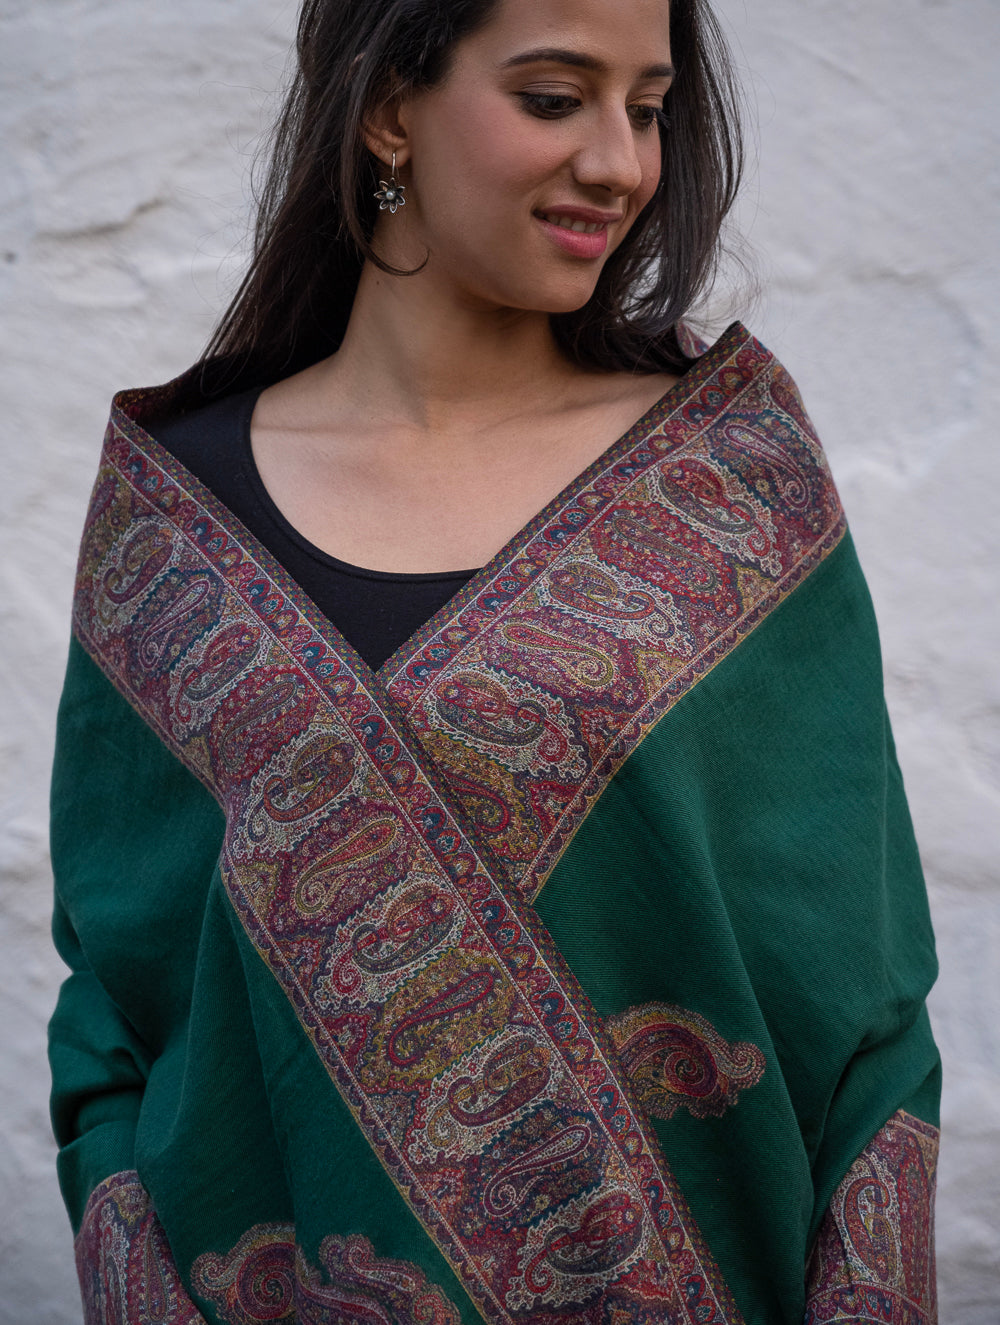 Load image into Gallery viewer, Regal Statement. Exclusive Soft Jamavar Design Kashmiri Shawl - Emerald Green